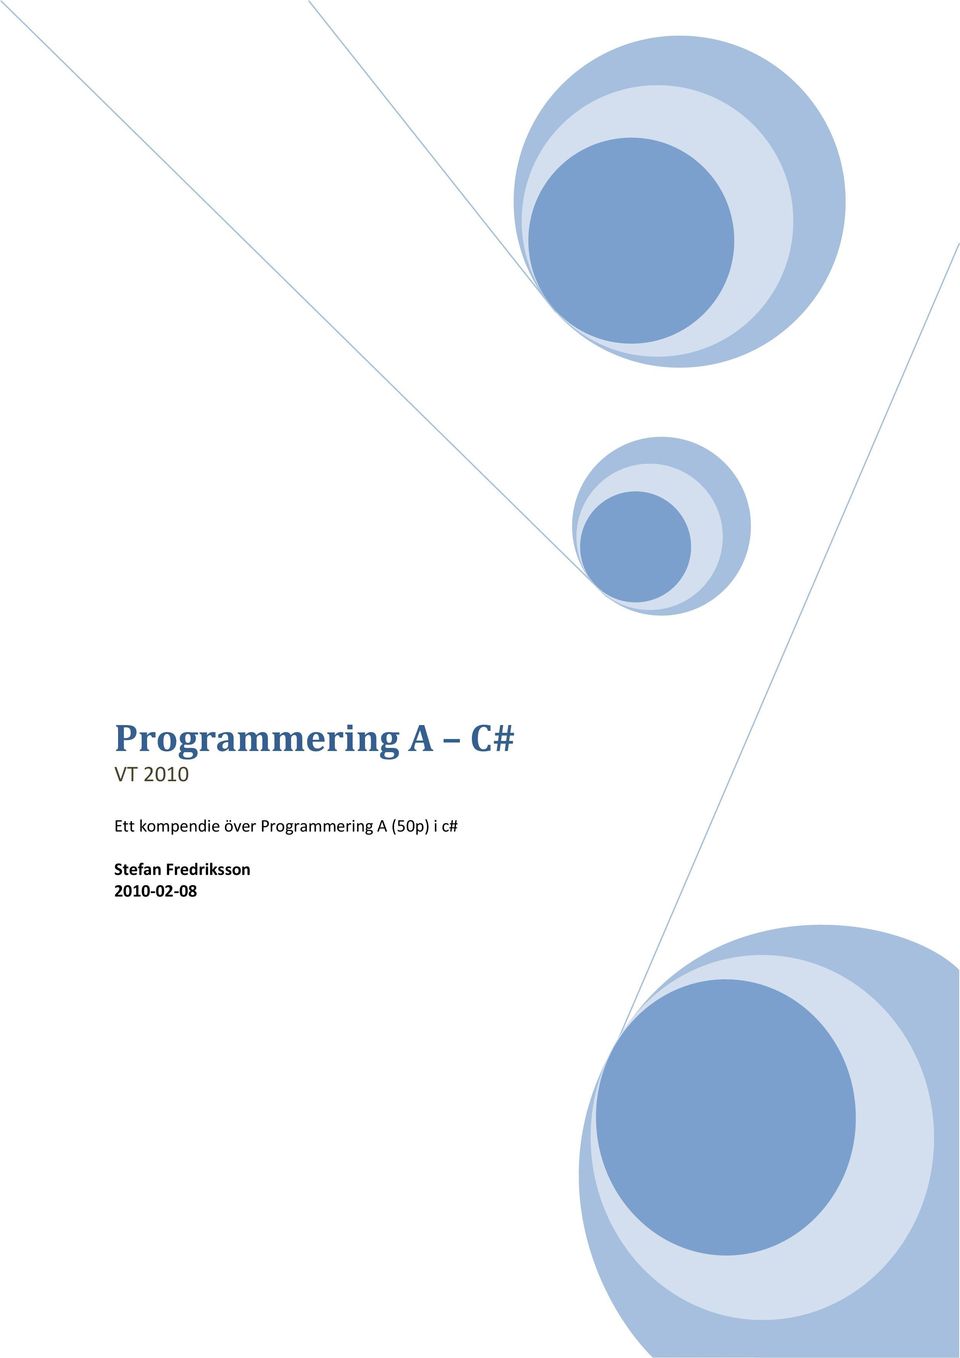 Programmering A (50p) i